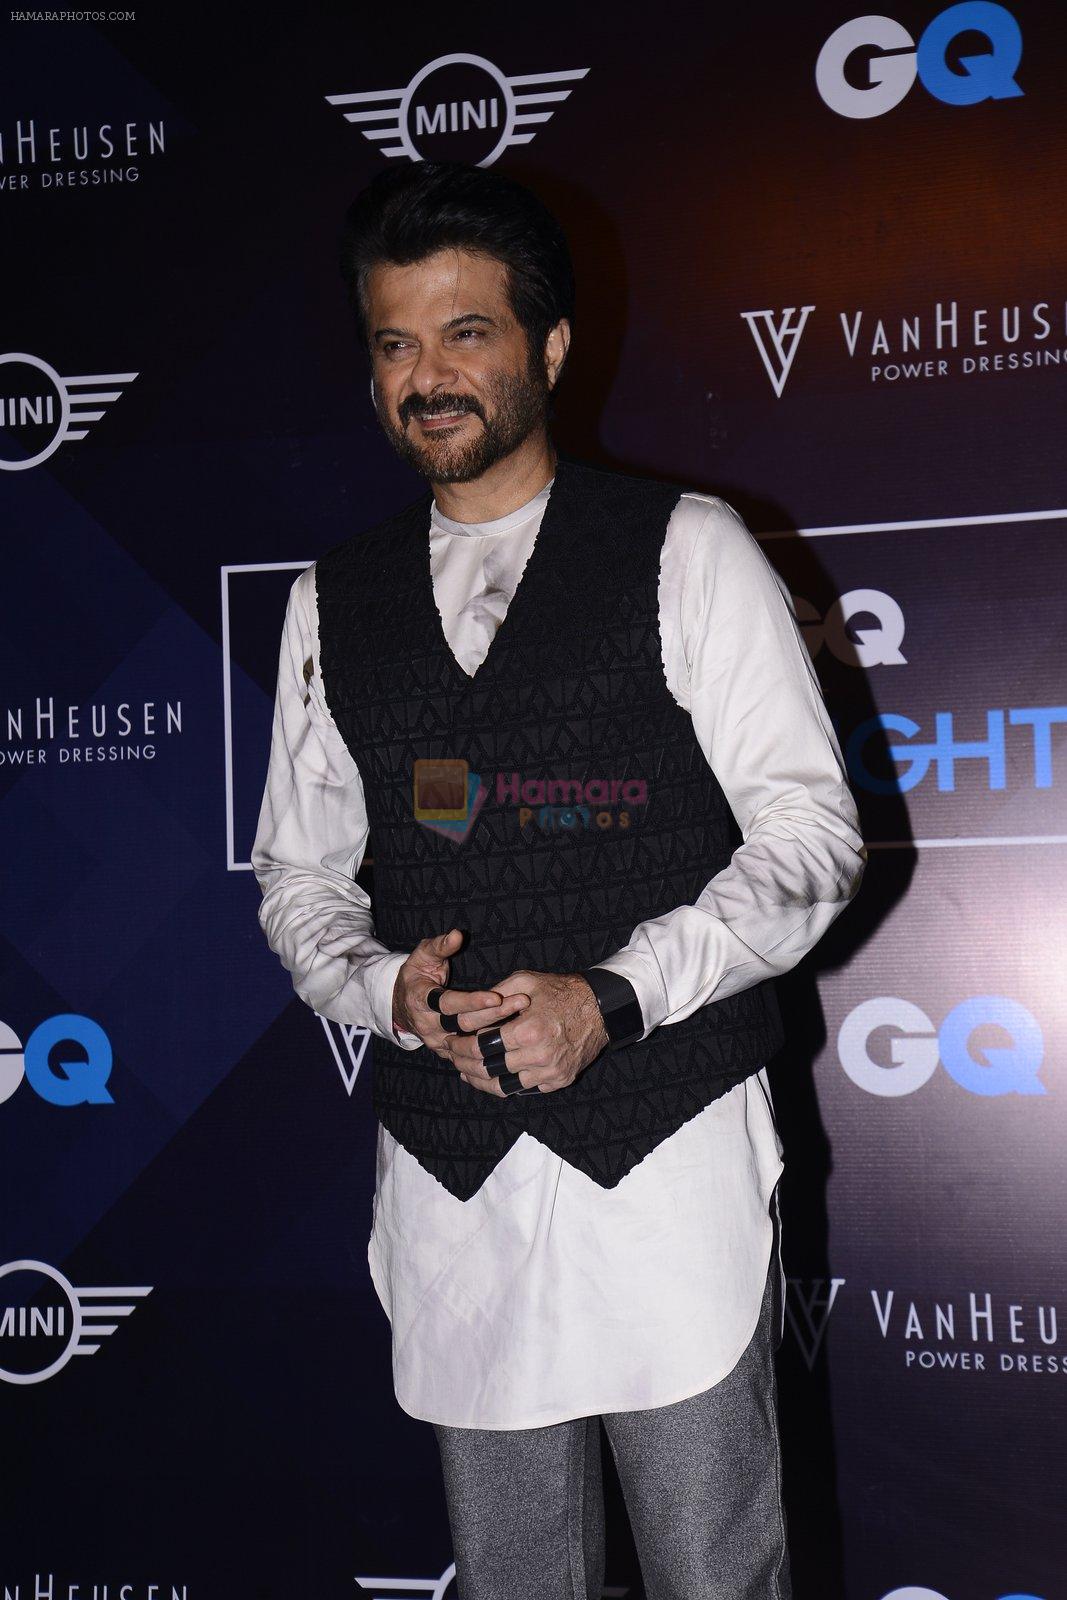 Anil Kapoor at GQ Fashion Night on 4th Dec 2016